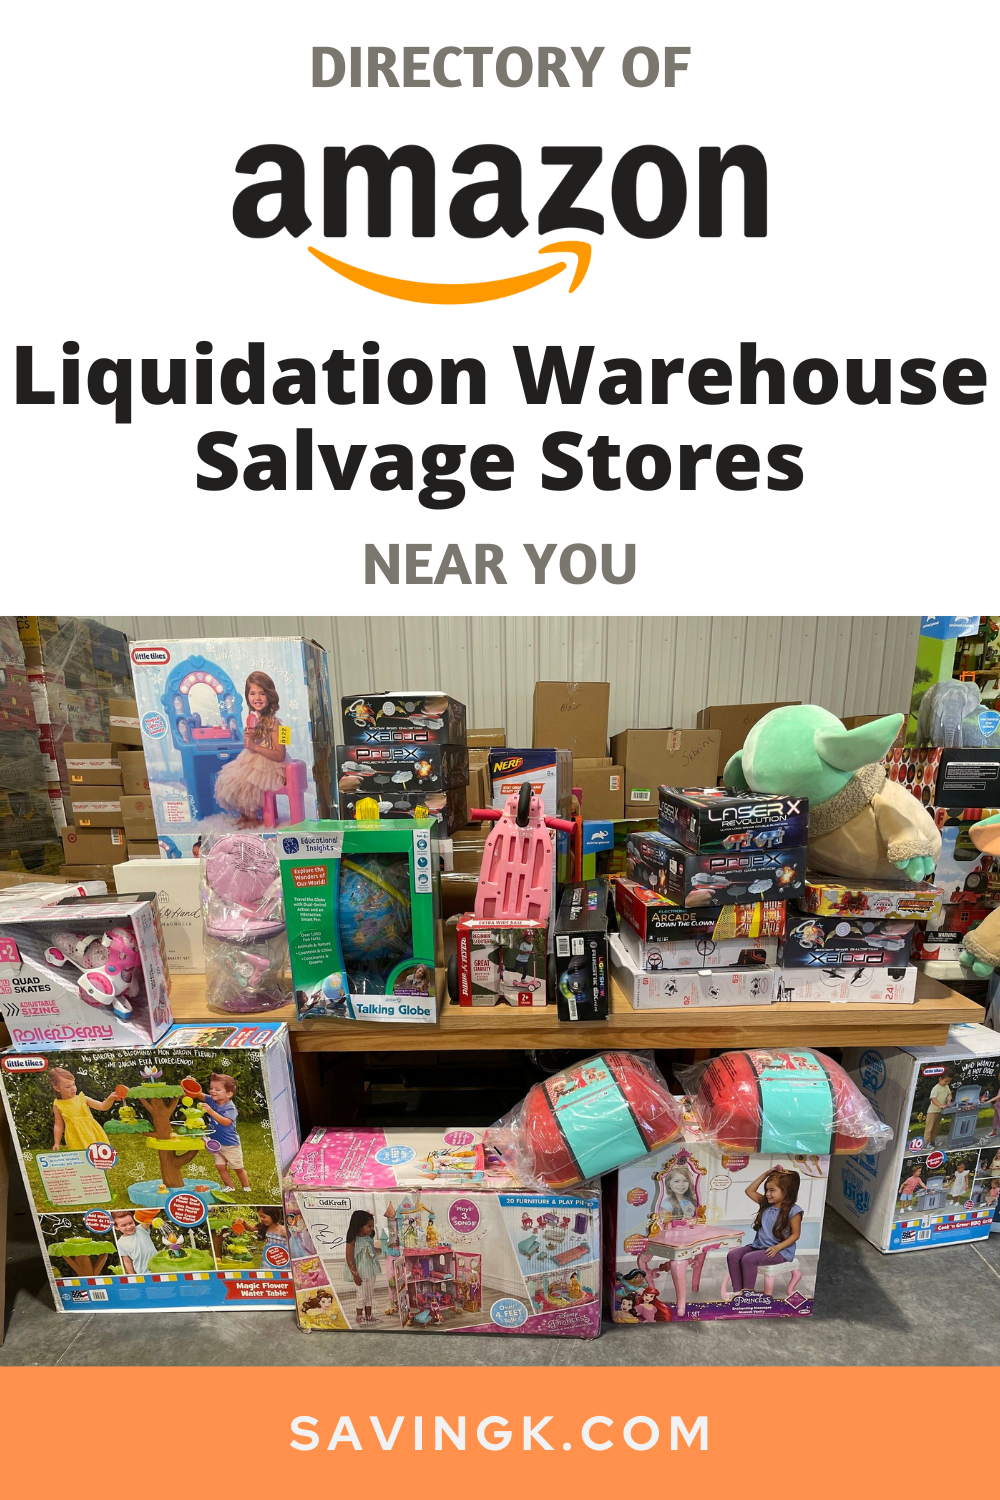 List of Amazon Liquidation Warehouse Salvage Stores